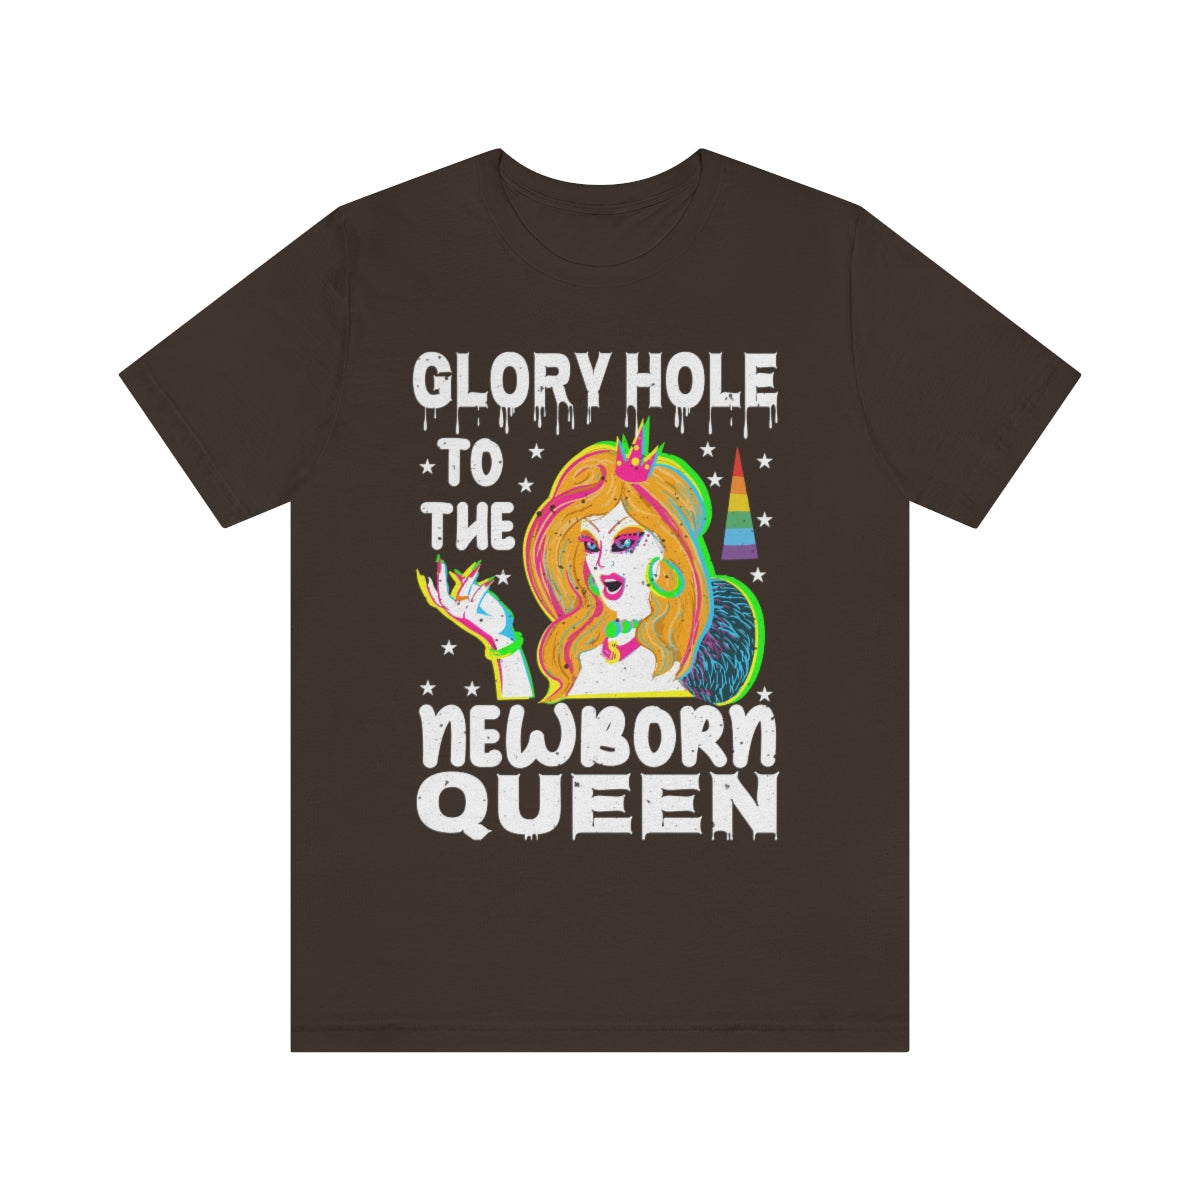 Classic Unisex Christmas LGBTQ T-Shirt - Glory hole to the Newborn Queen Printify